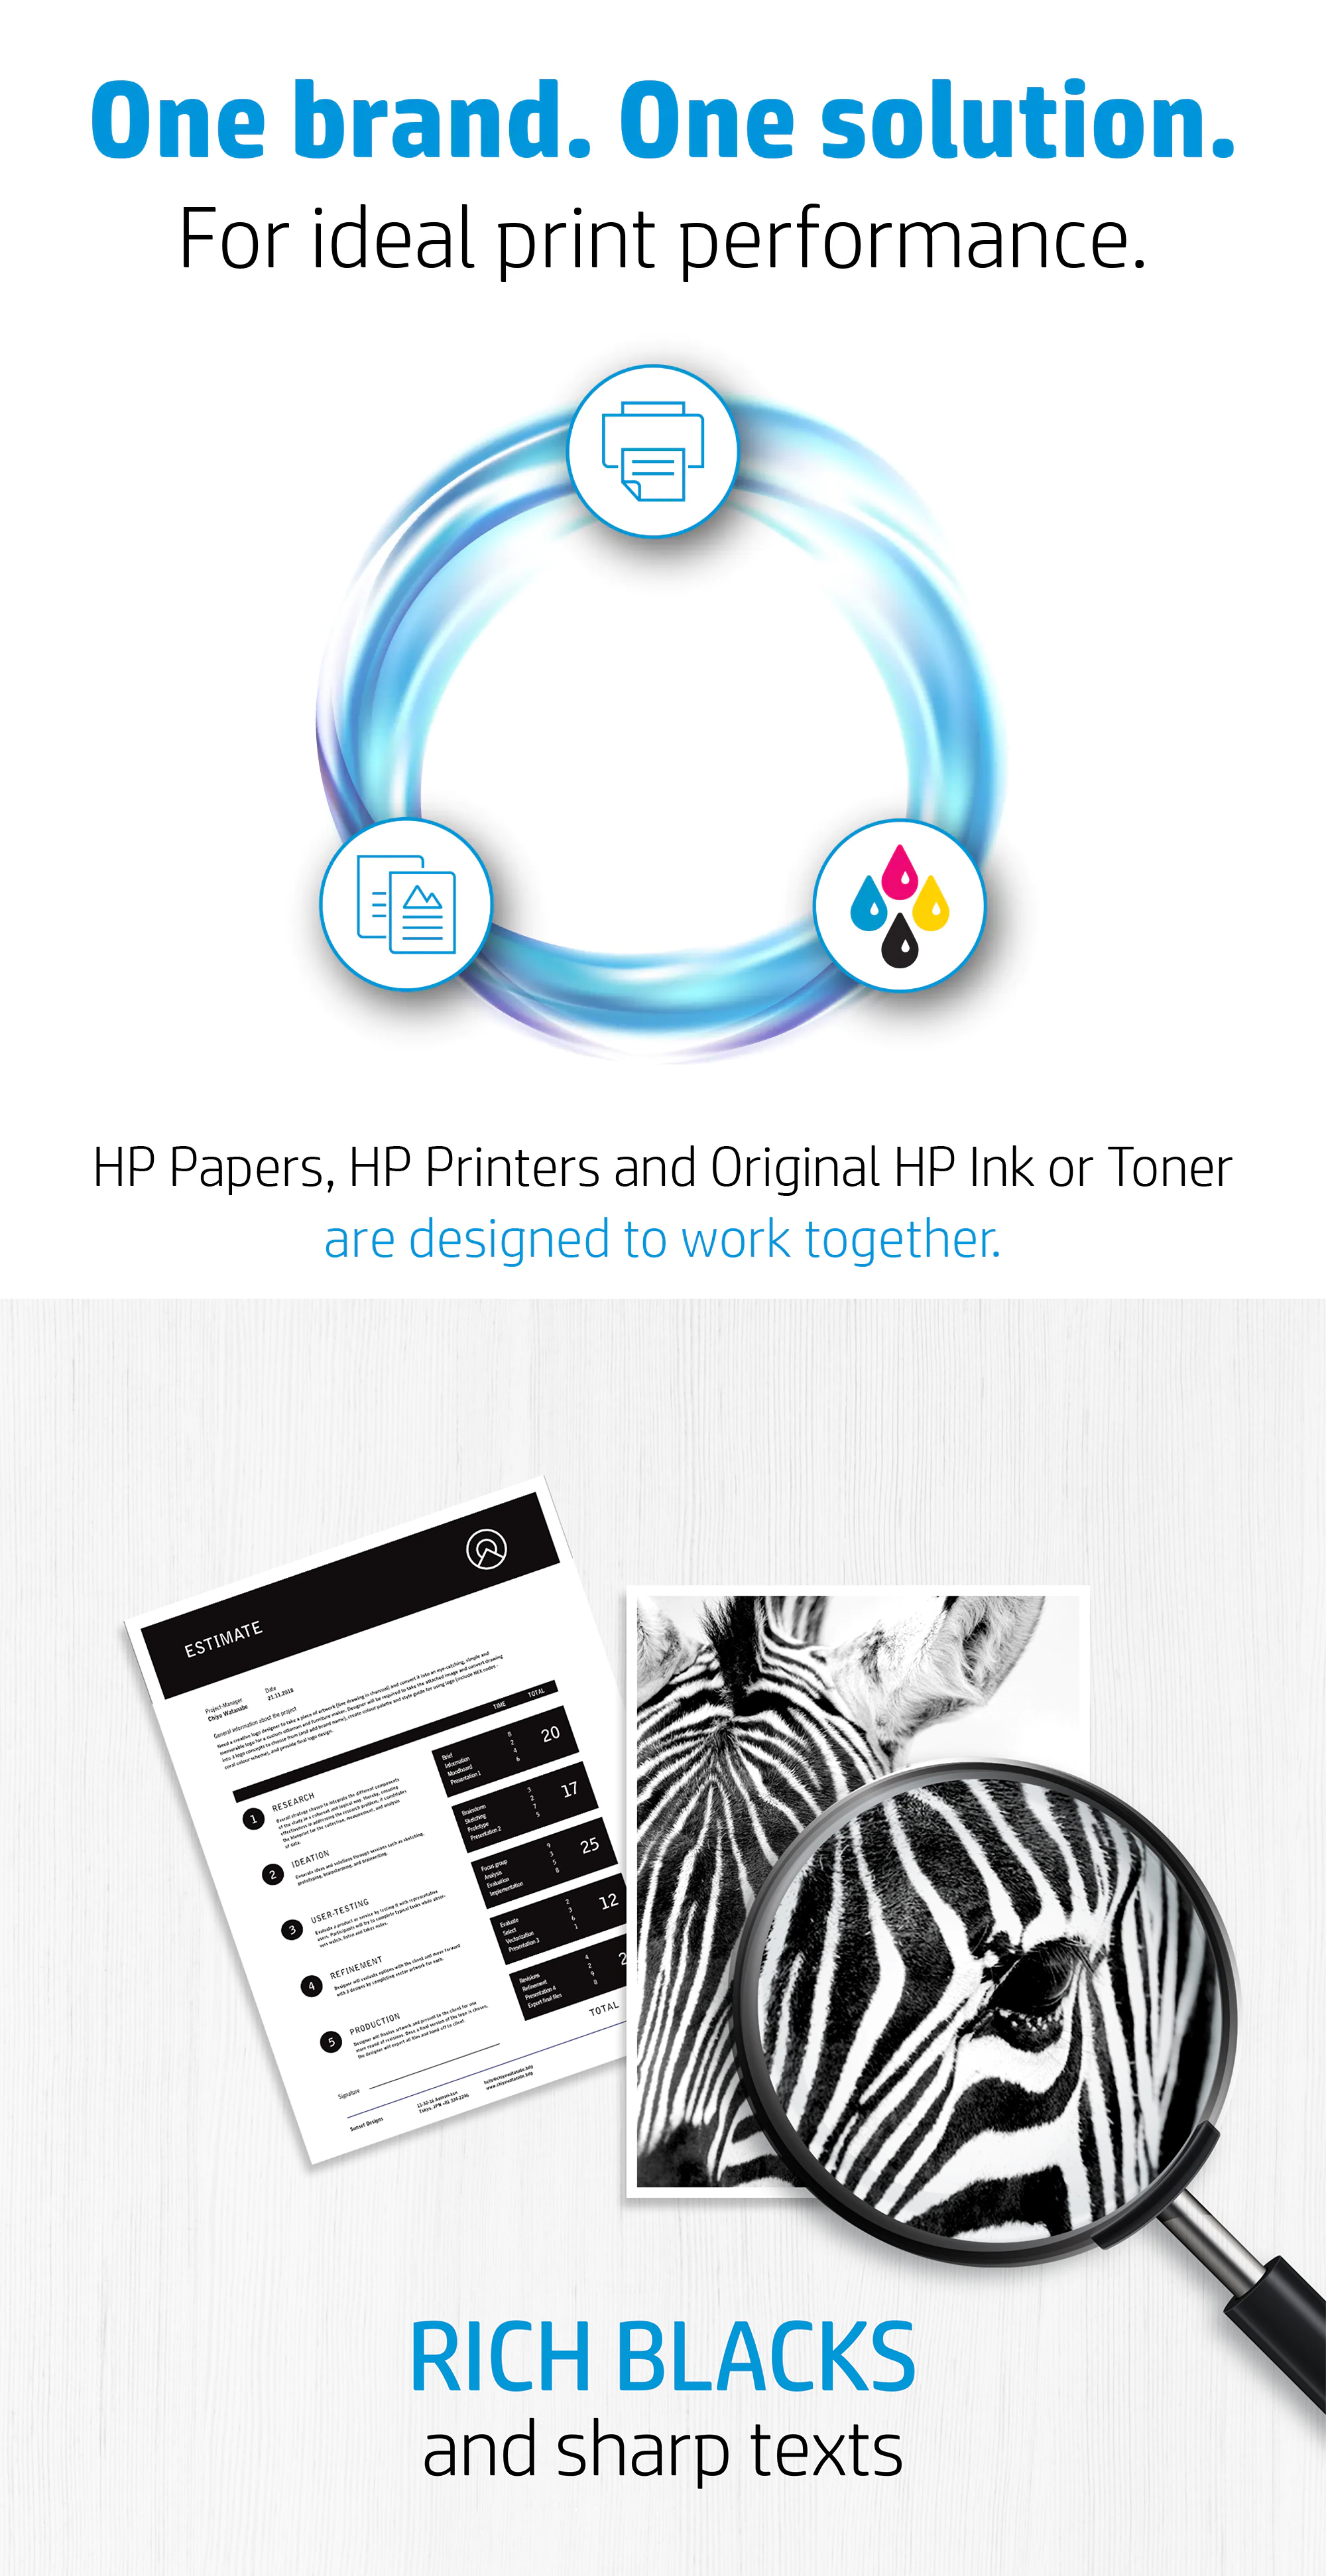 HP-Printer-Ink-HP-90A-Toner-Cartridge-Black-2